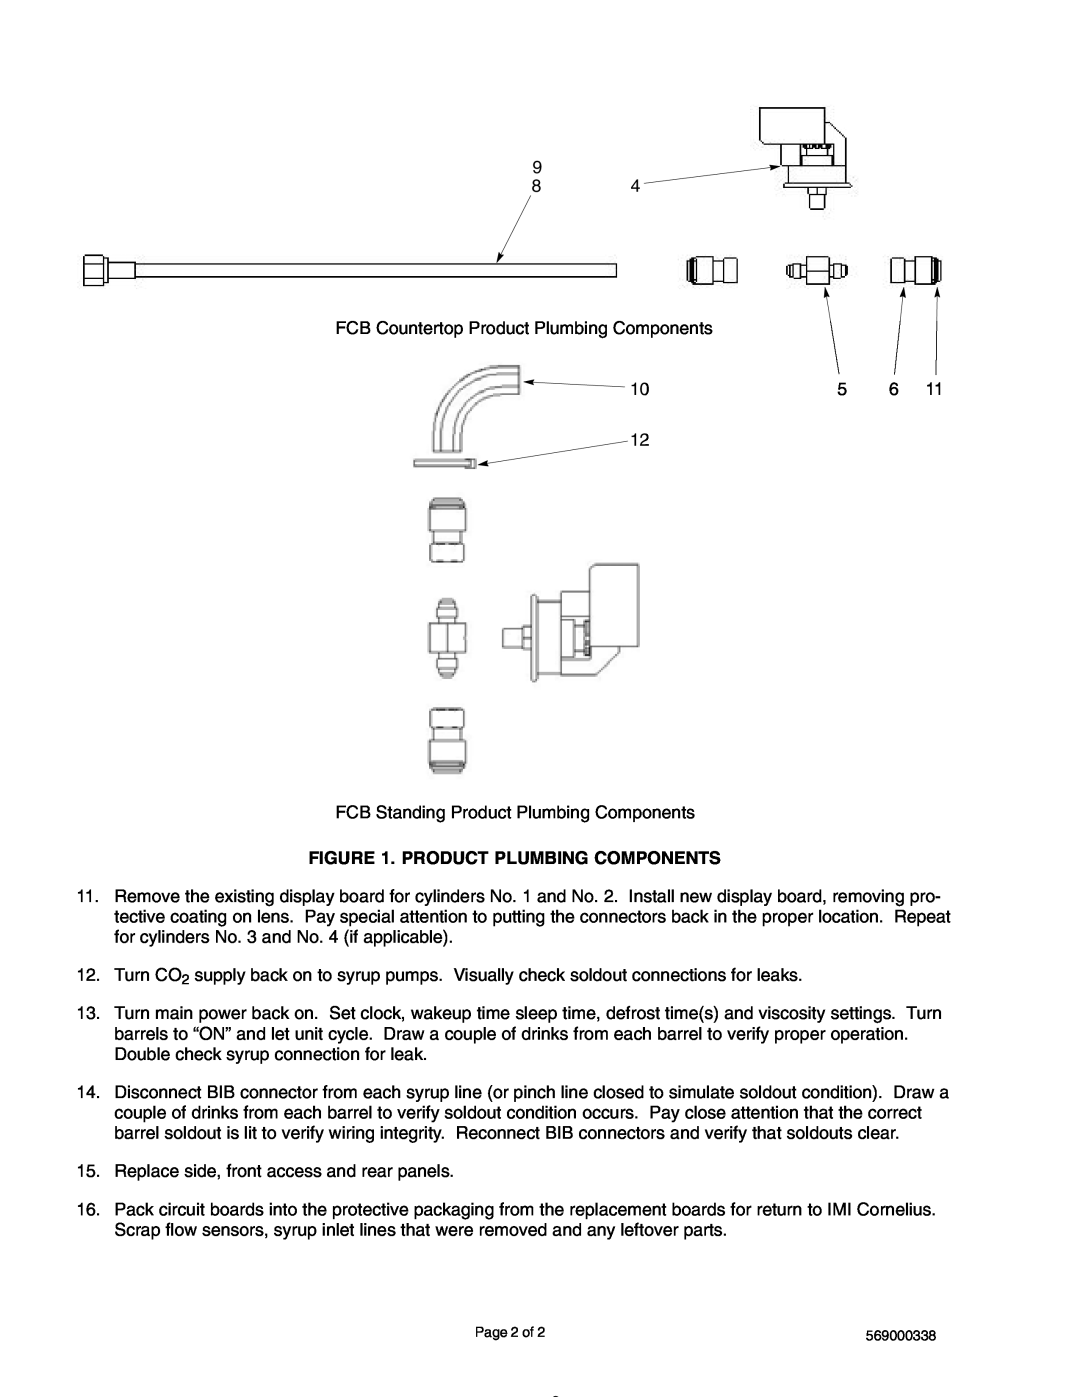 Cornelius 569000689 installation instructions Product Plumbing Components 